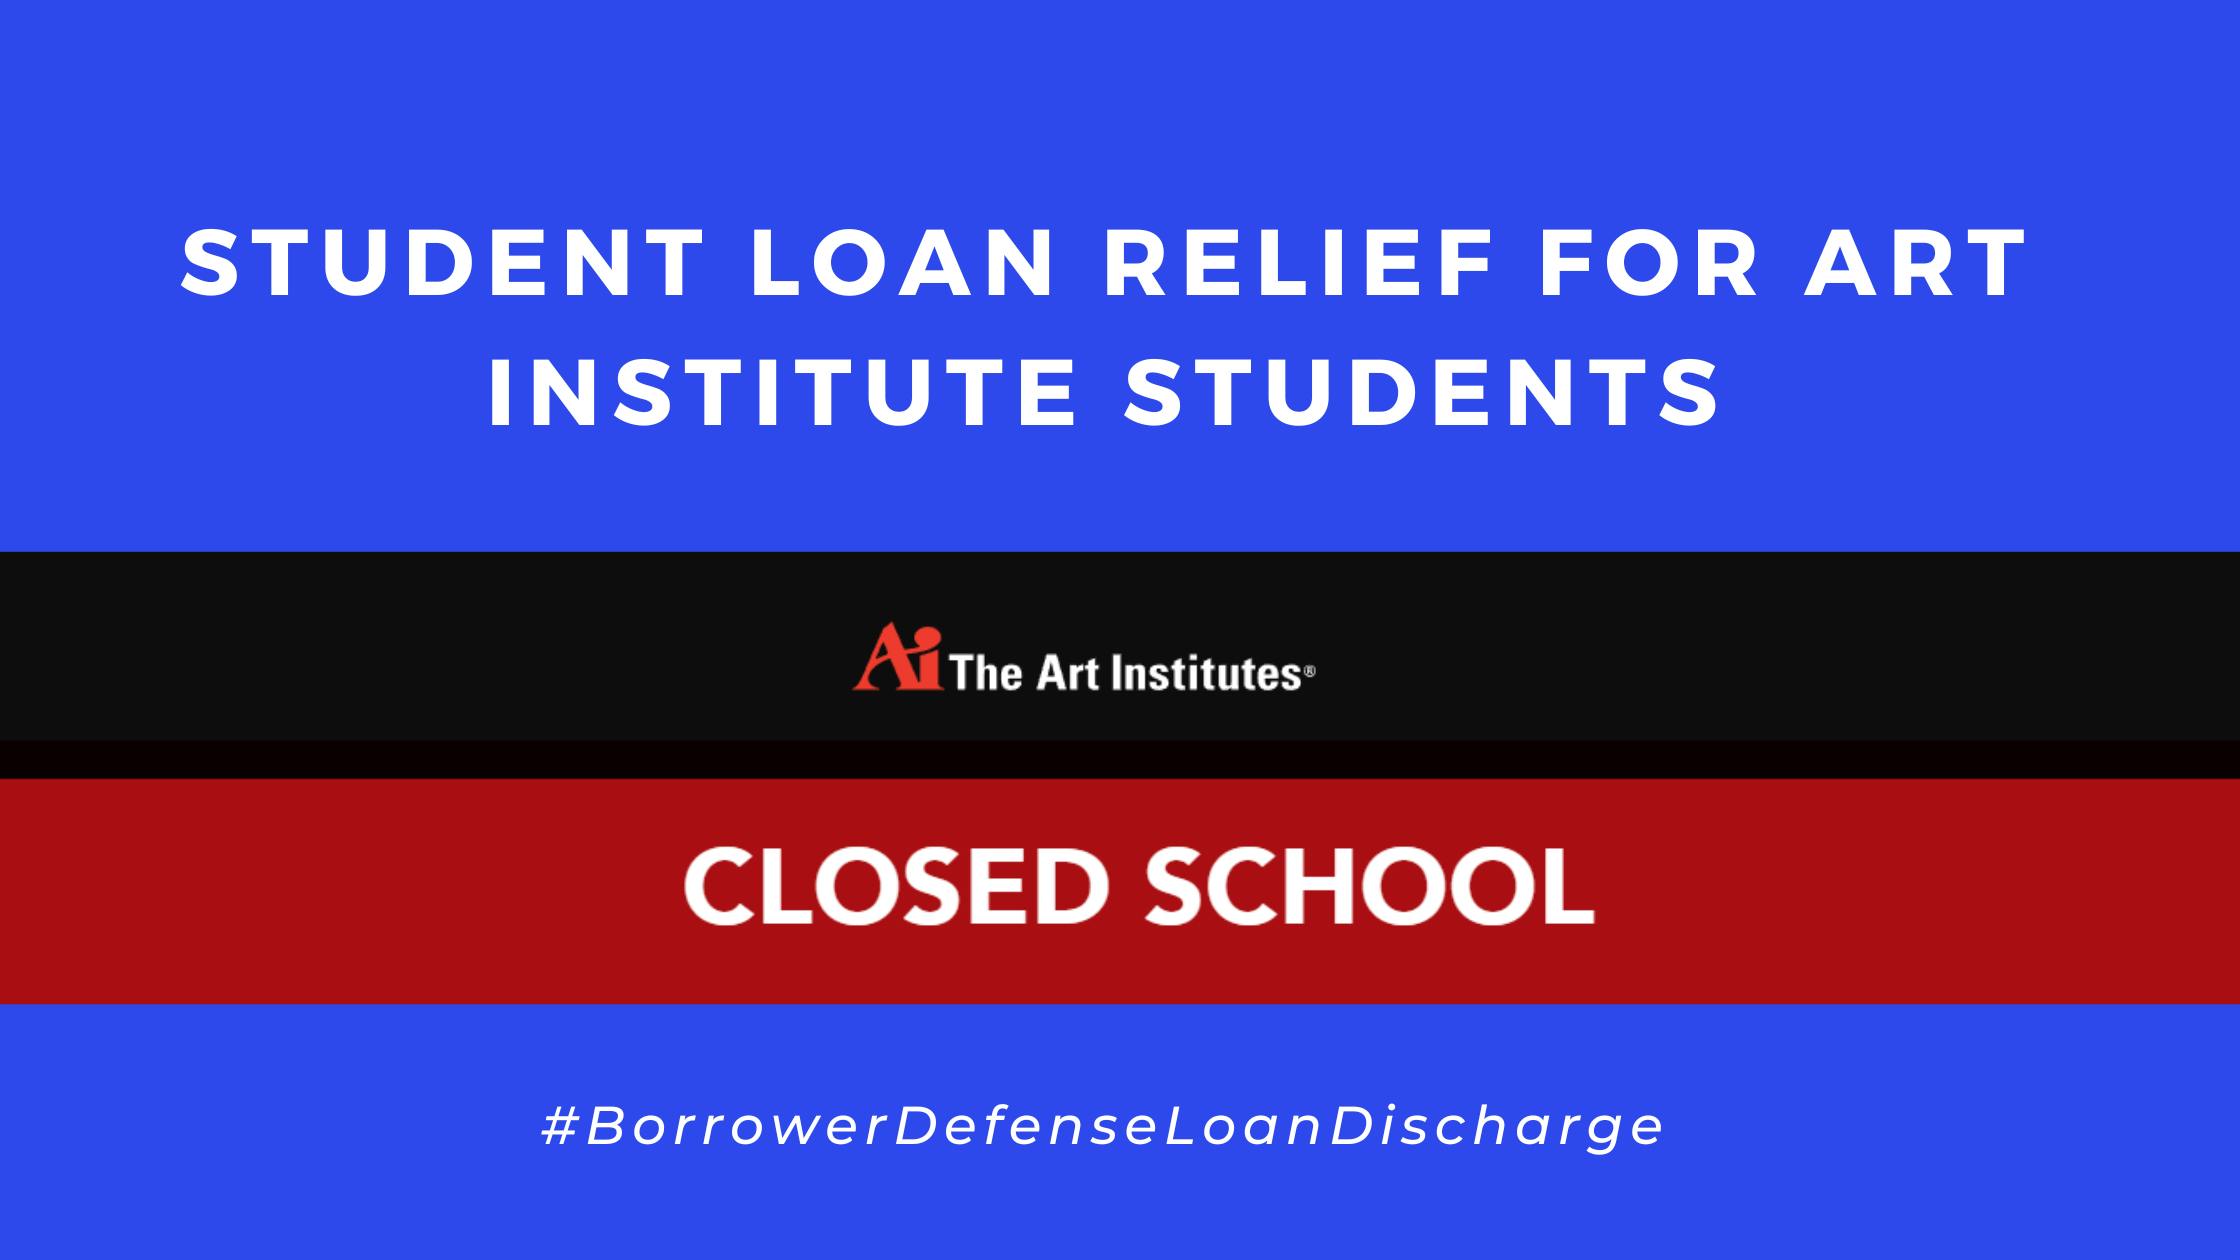 Biden Administration Announces $6.1 Billion Student Loan Relief for Art Institute Students